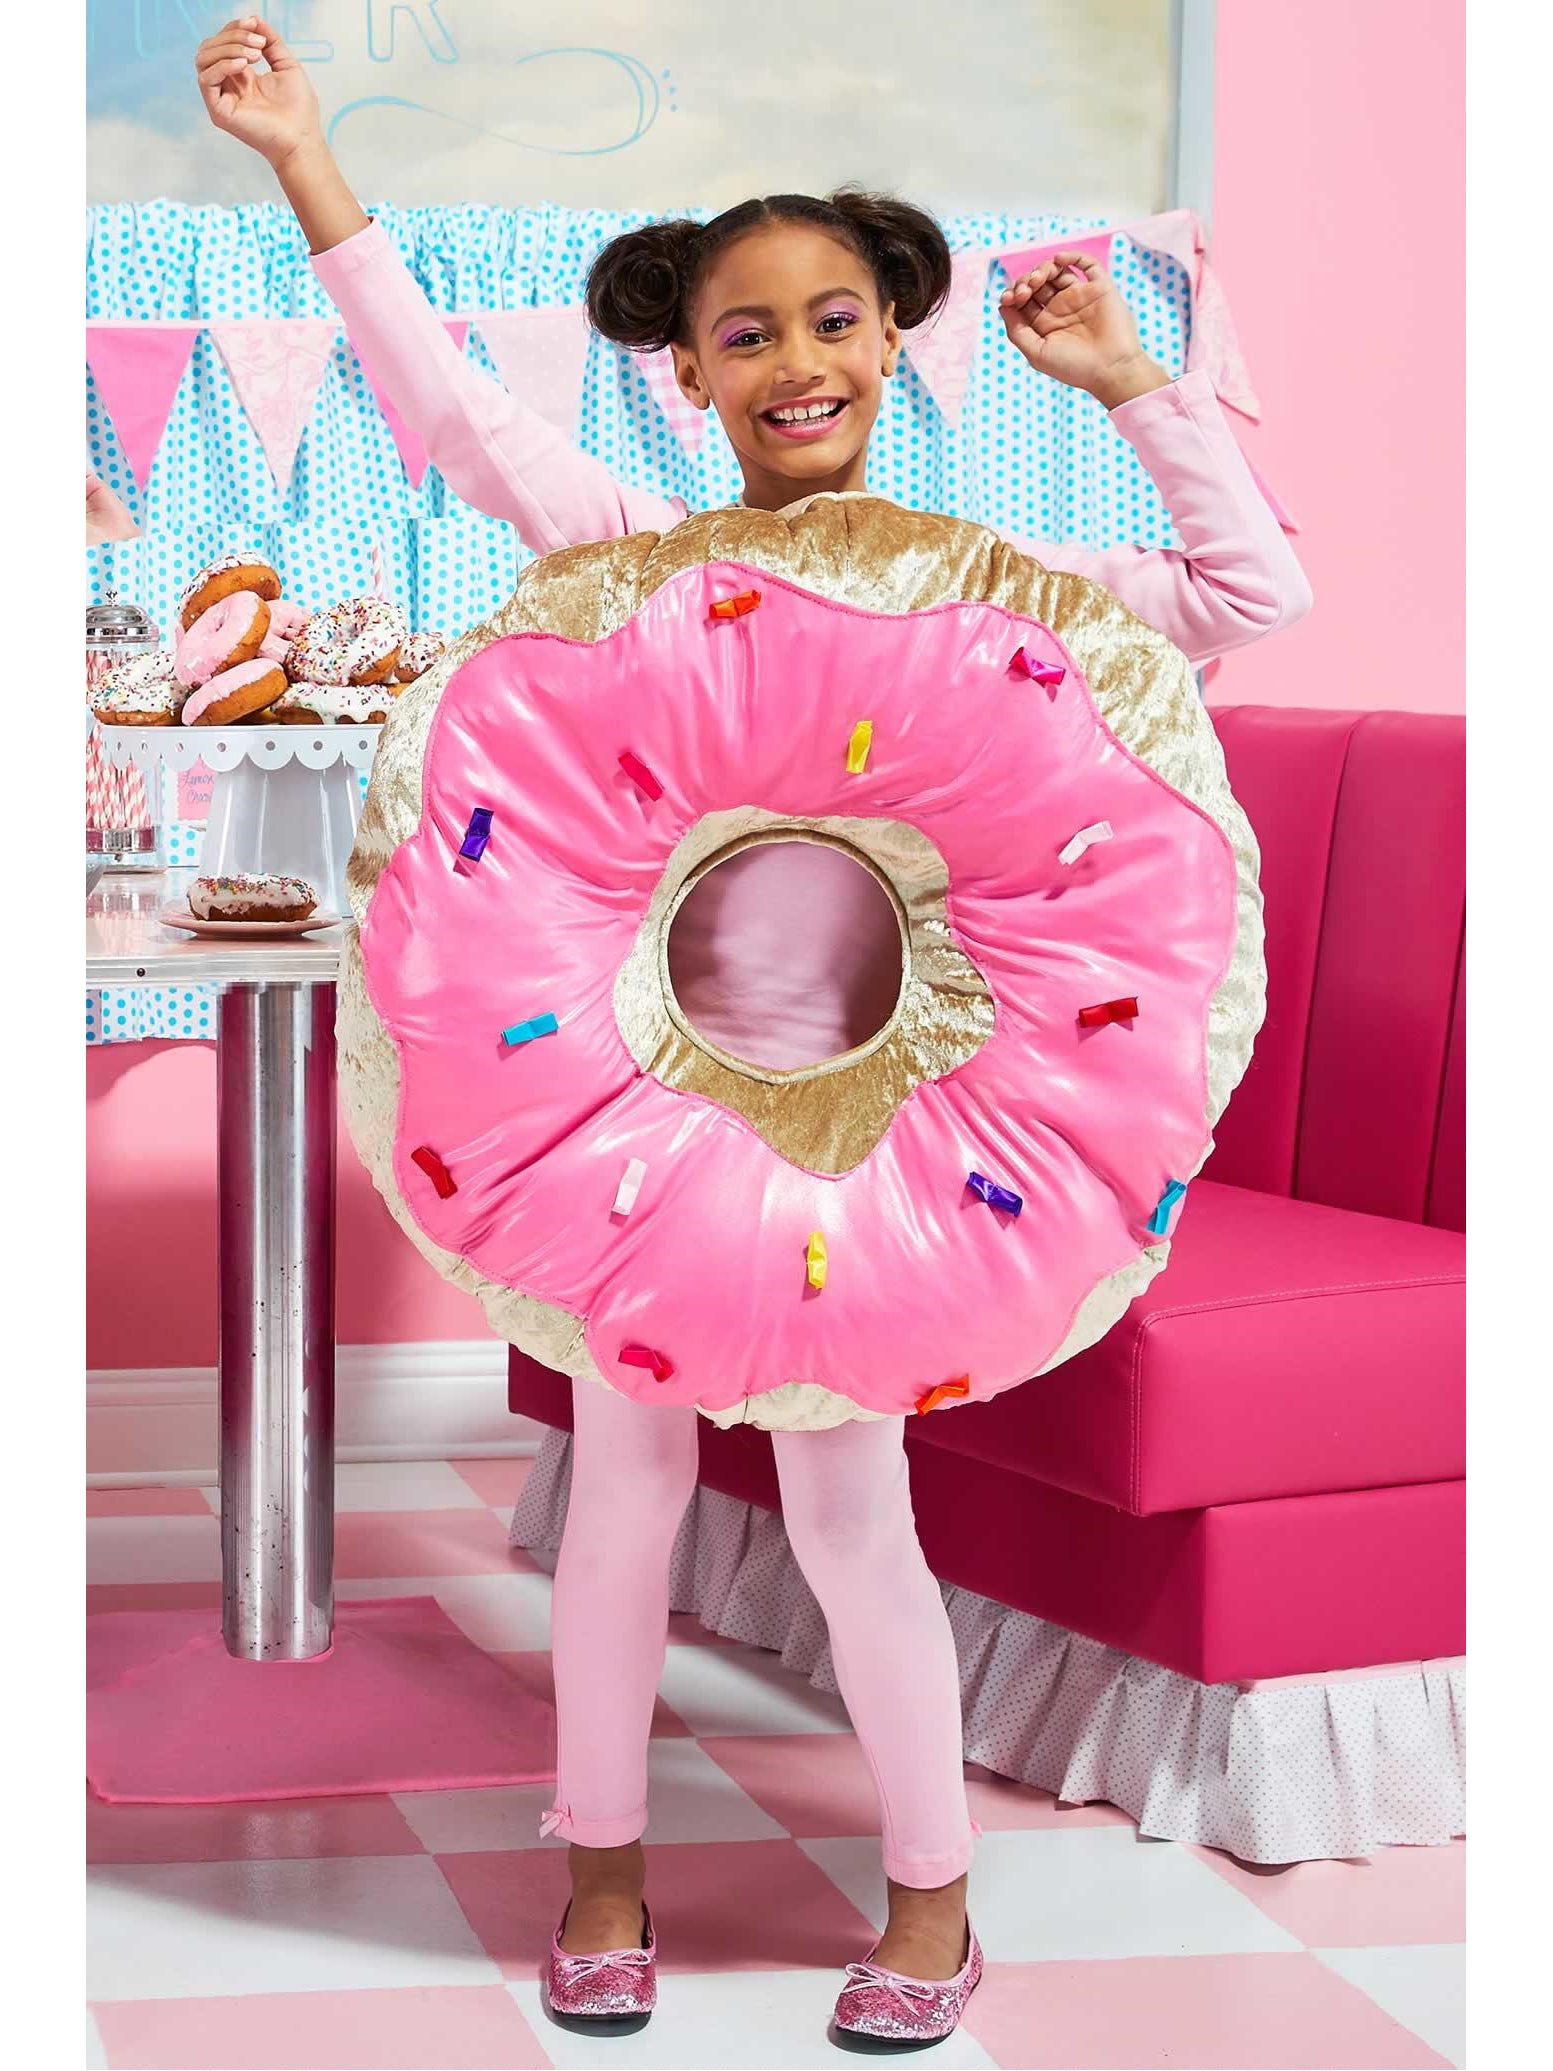 Donut costume